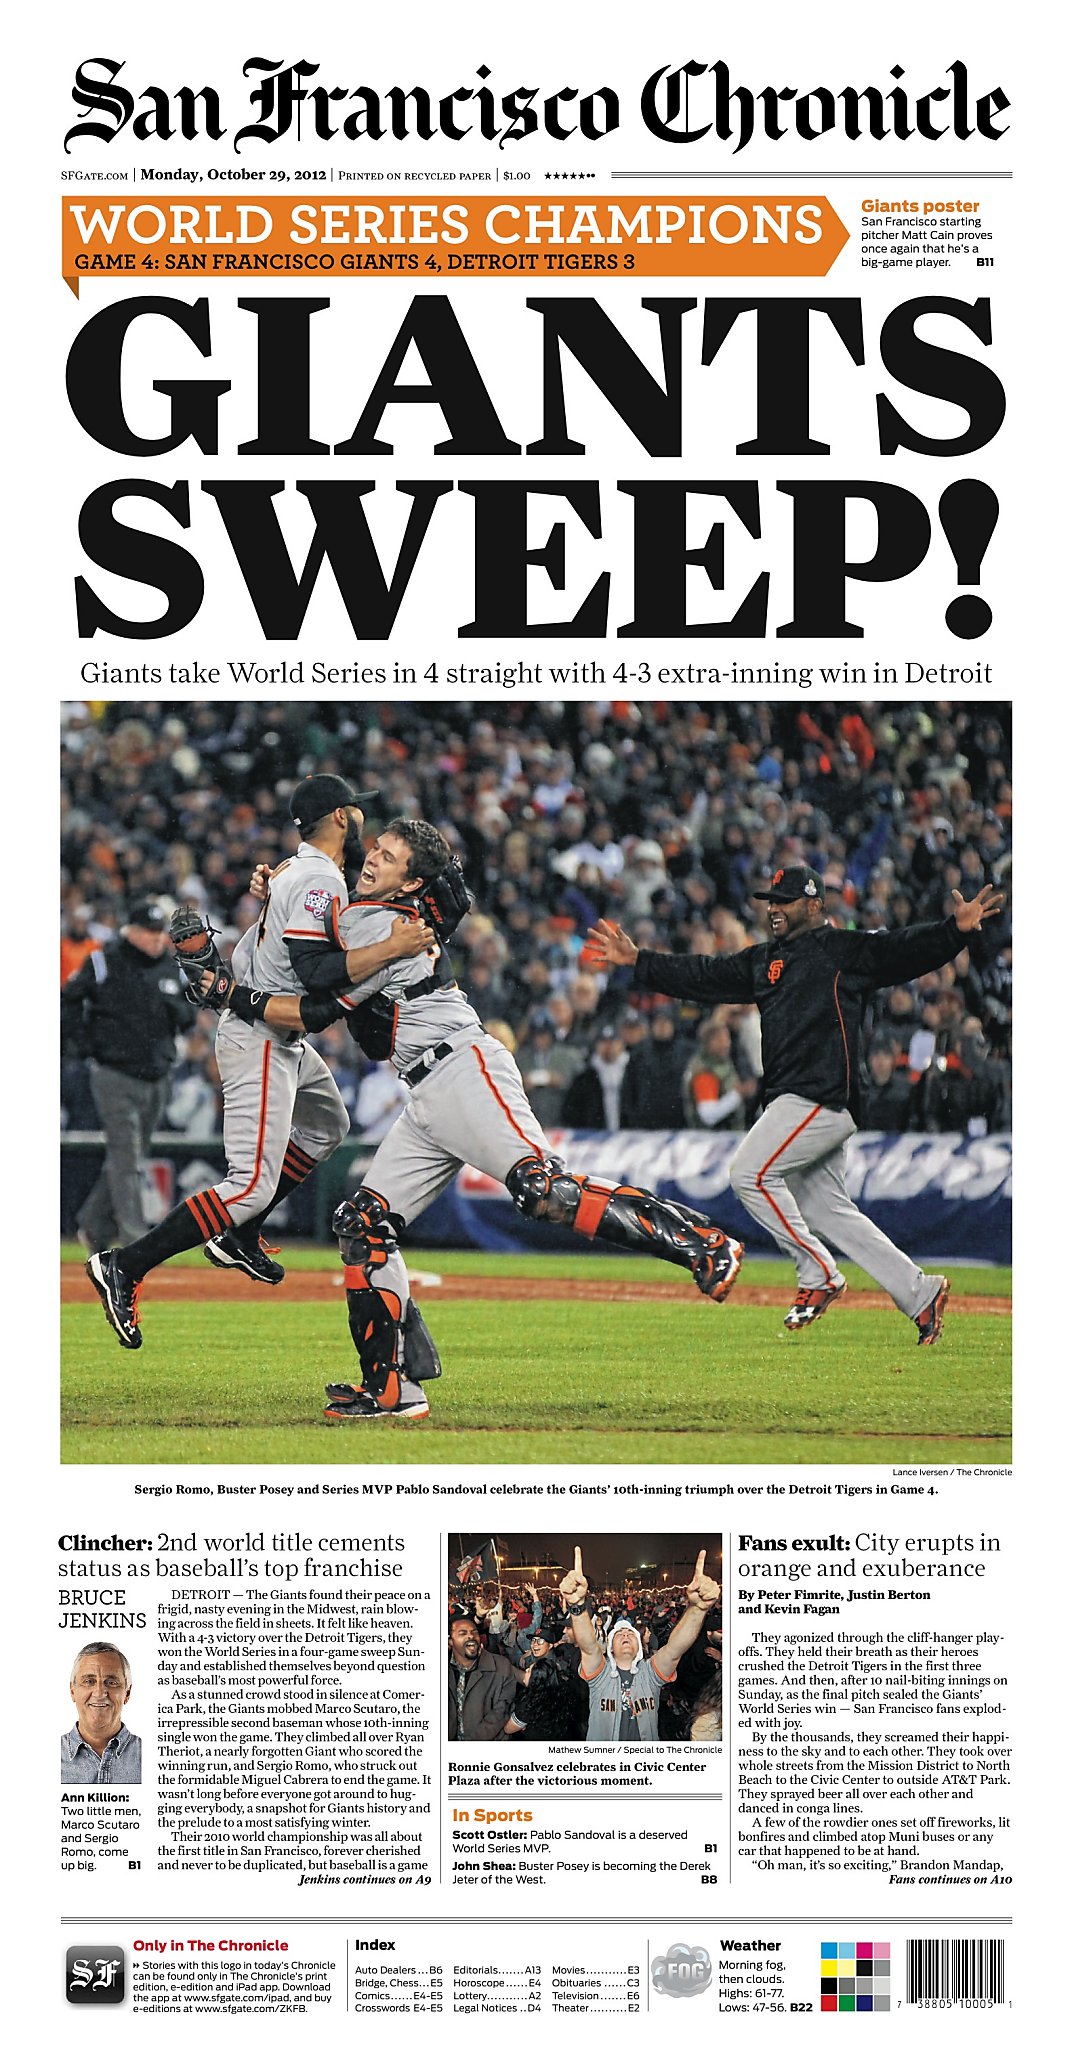 Giants sweep Tigers, win World Series - The Boston Globe